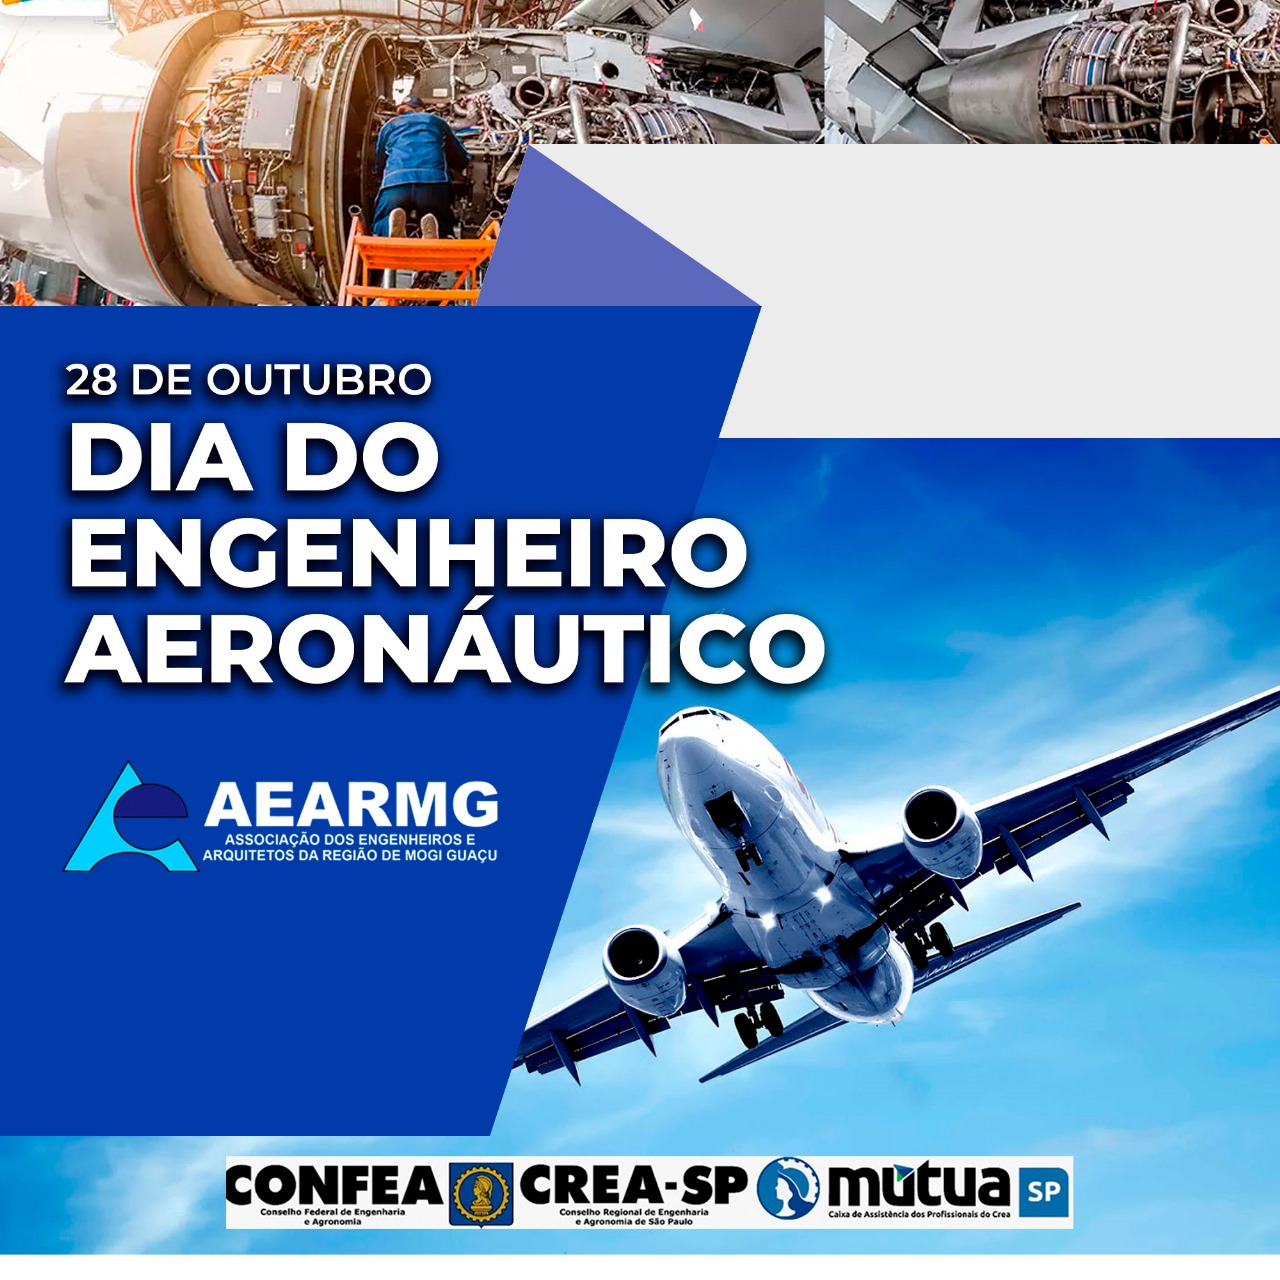 Dia do Engenheiro Aeronaútico - AEARMG - 28 de outubro